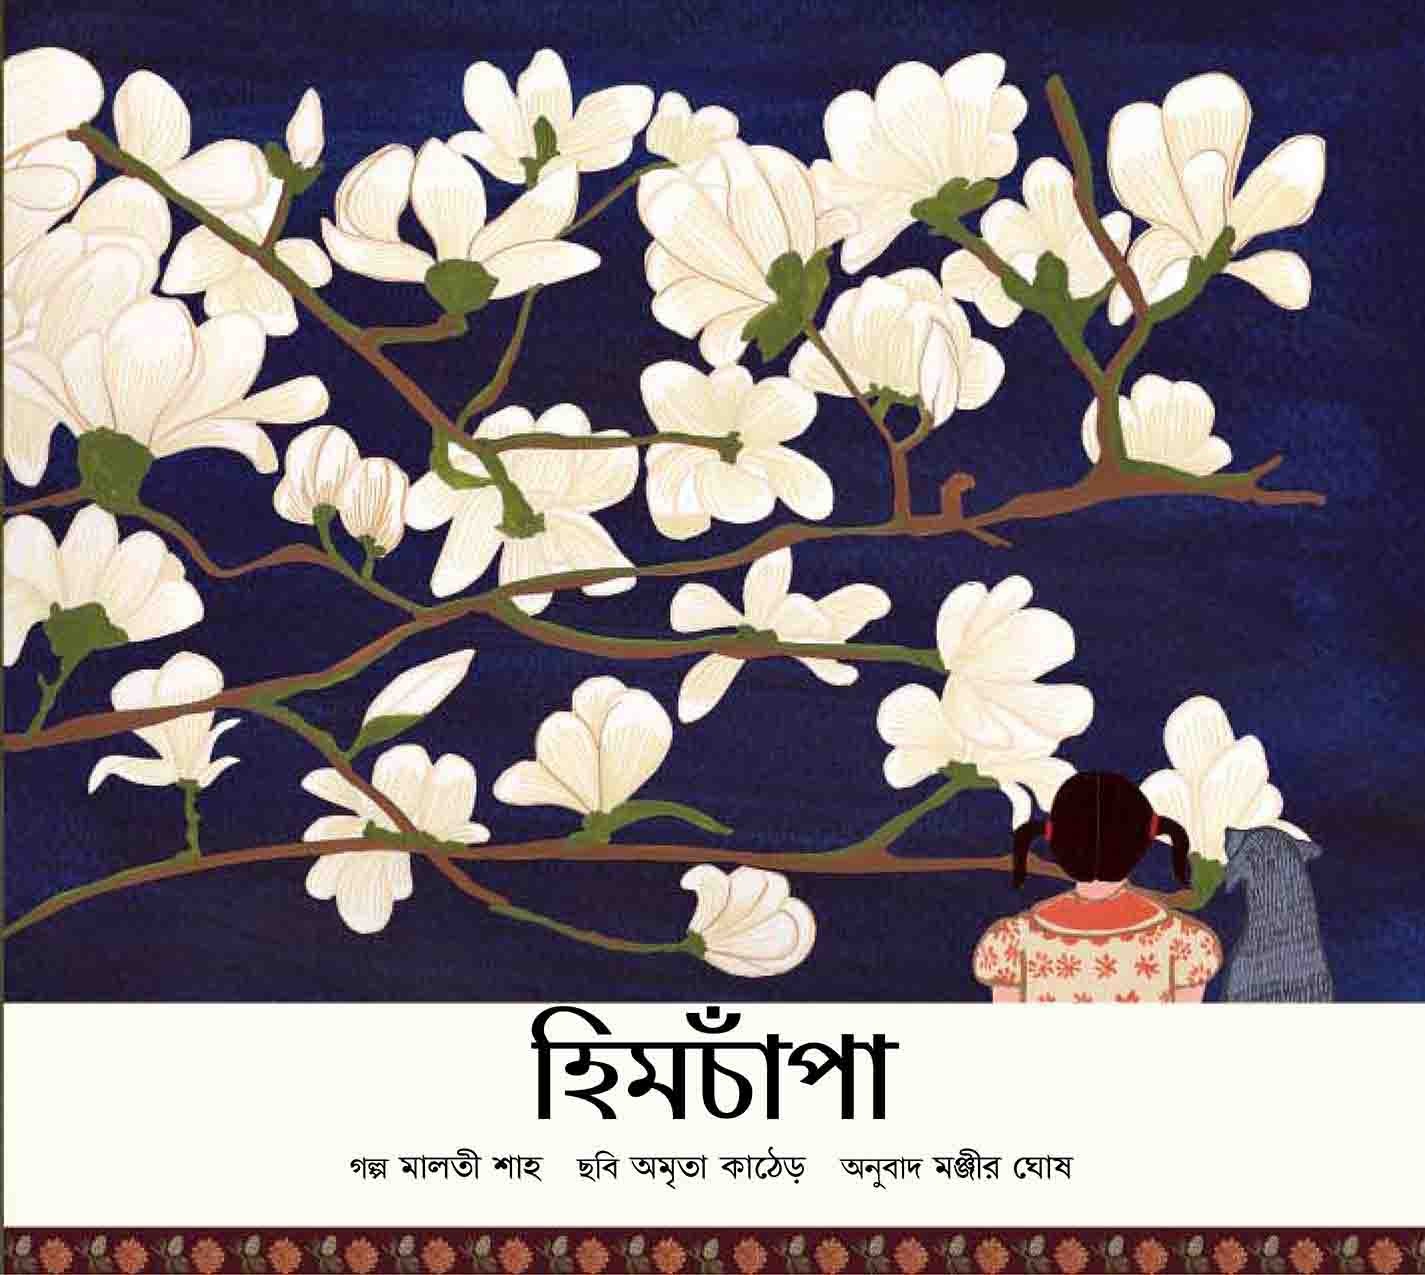 Magnolias/Himchampa (Bengali)